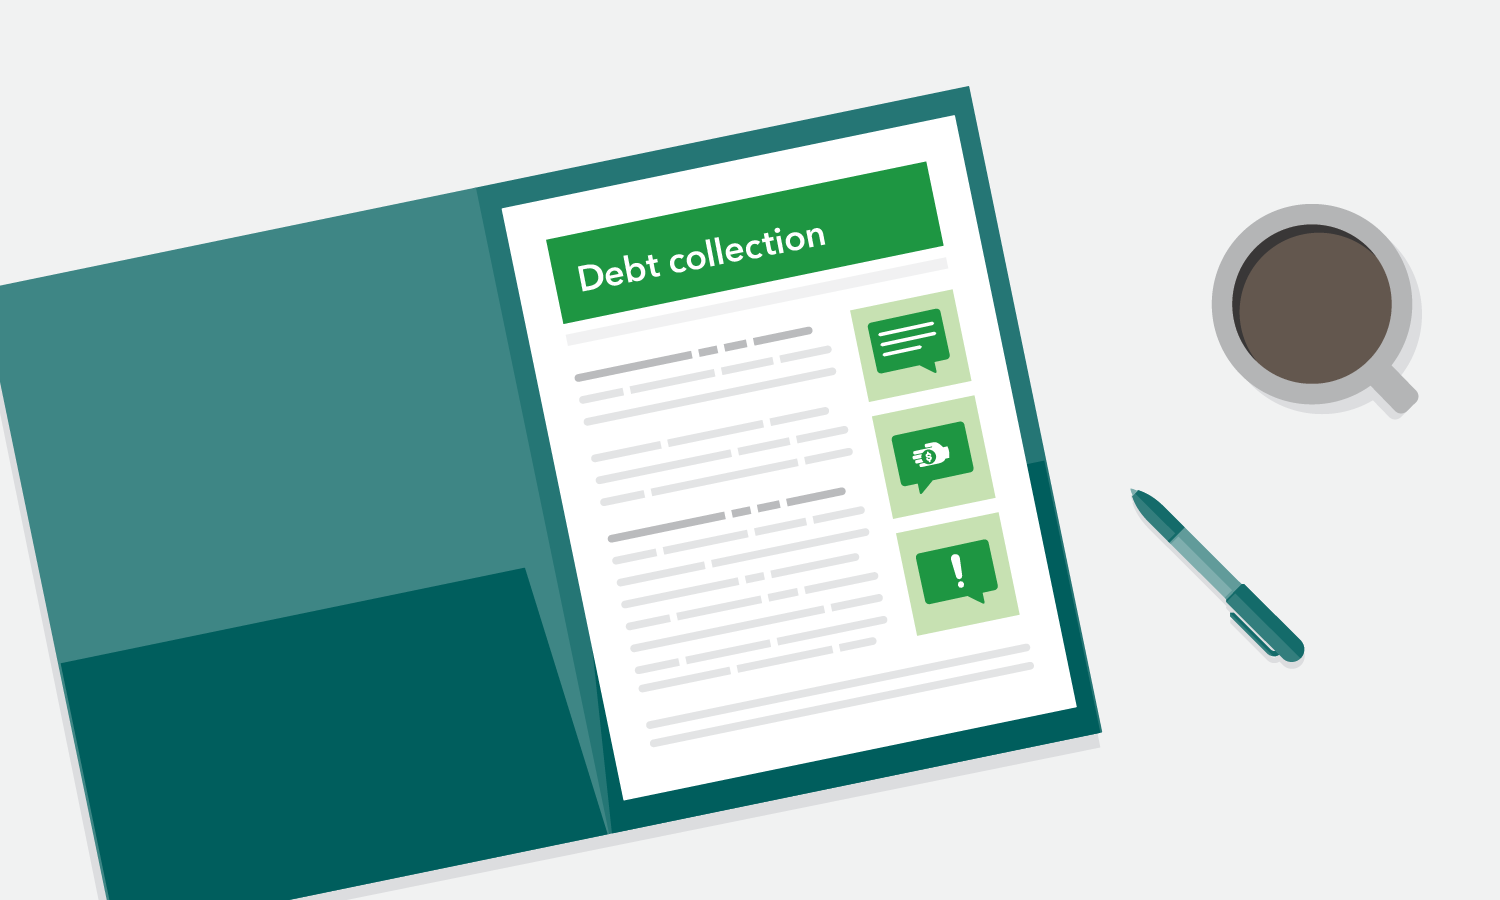 Debt collection blog illustration